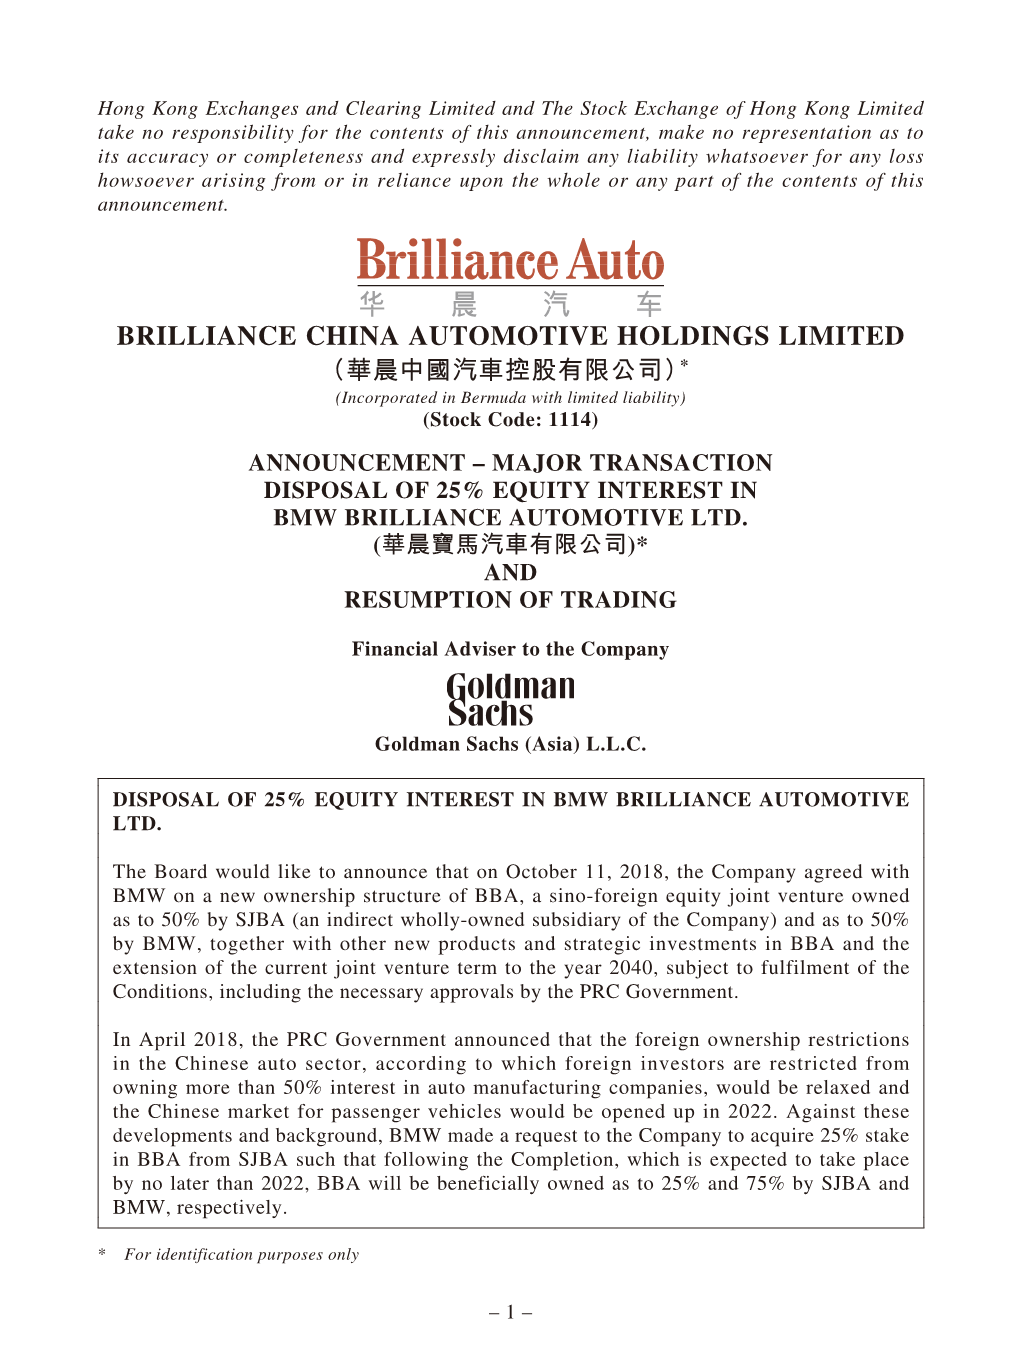 Brilliance China Automotive Holdings Limited